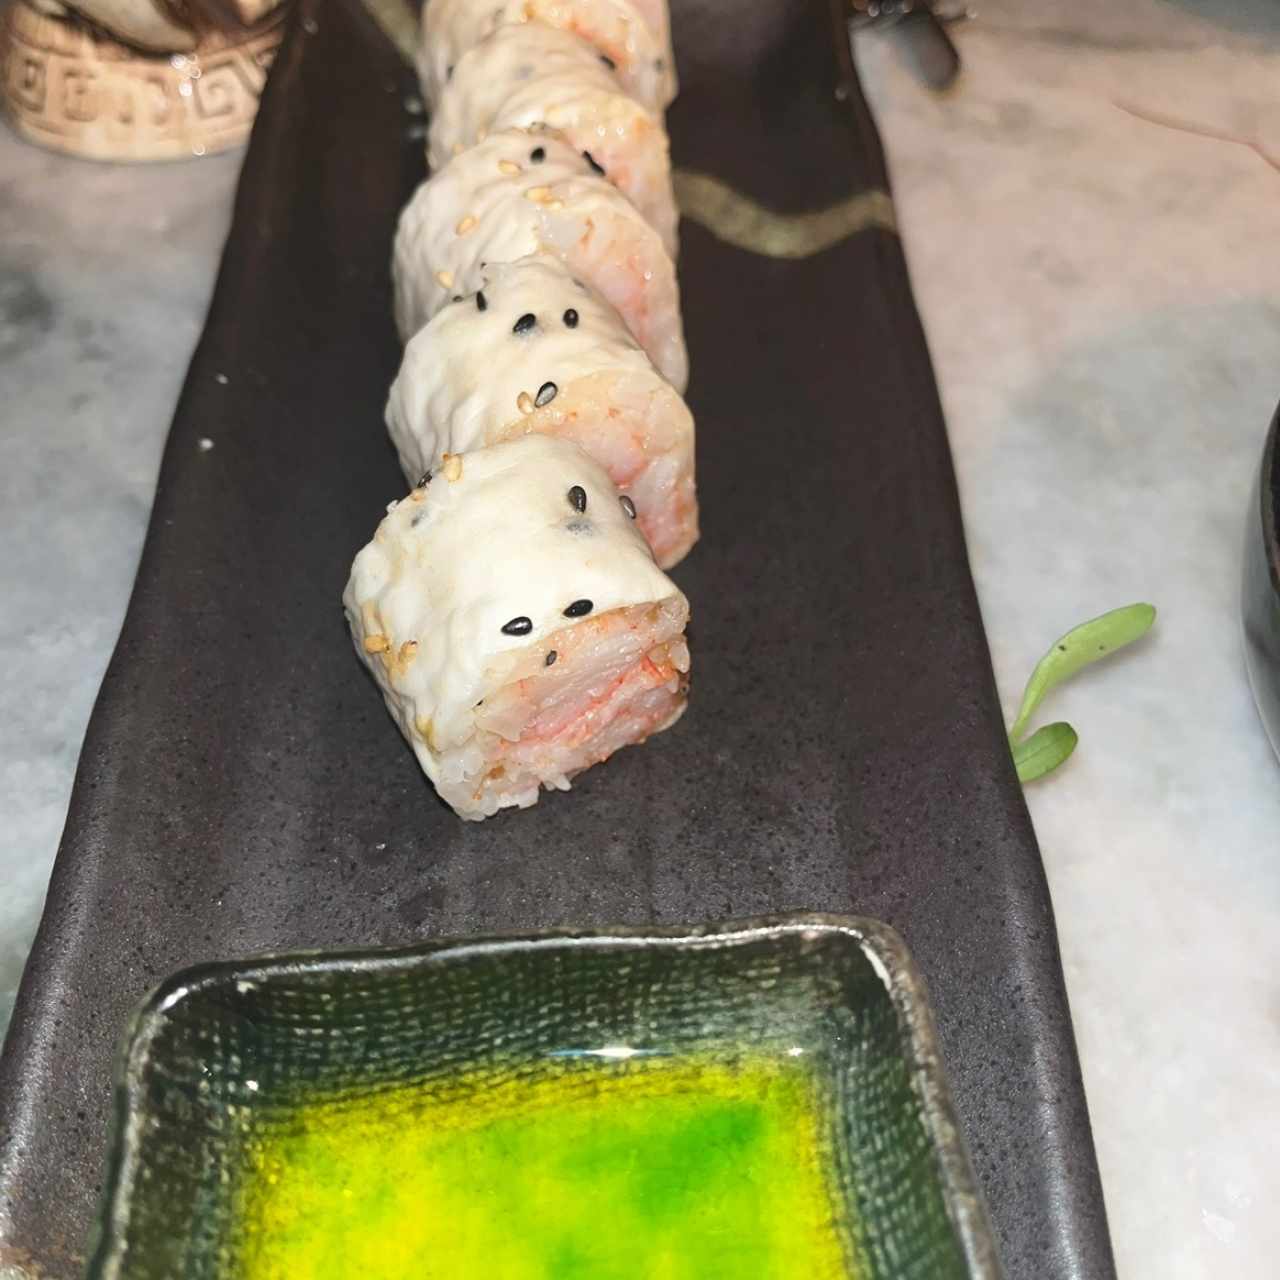 Sushi Bar - Dinamita